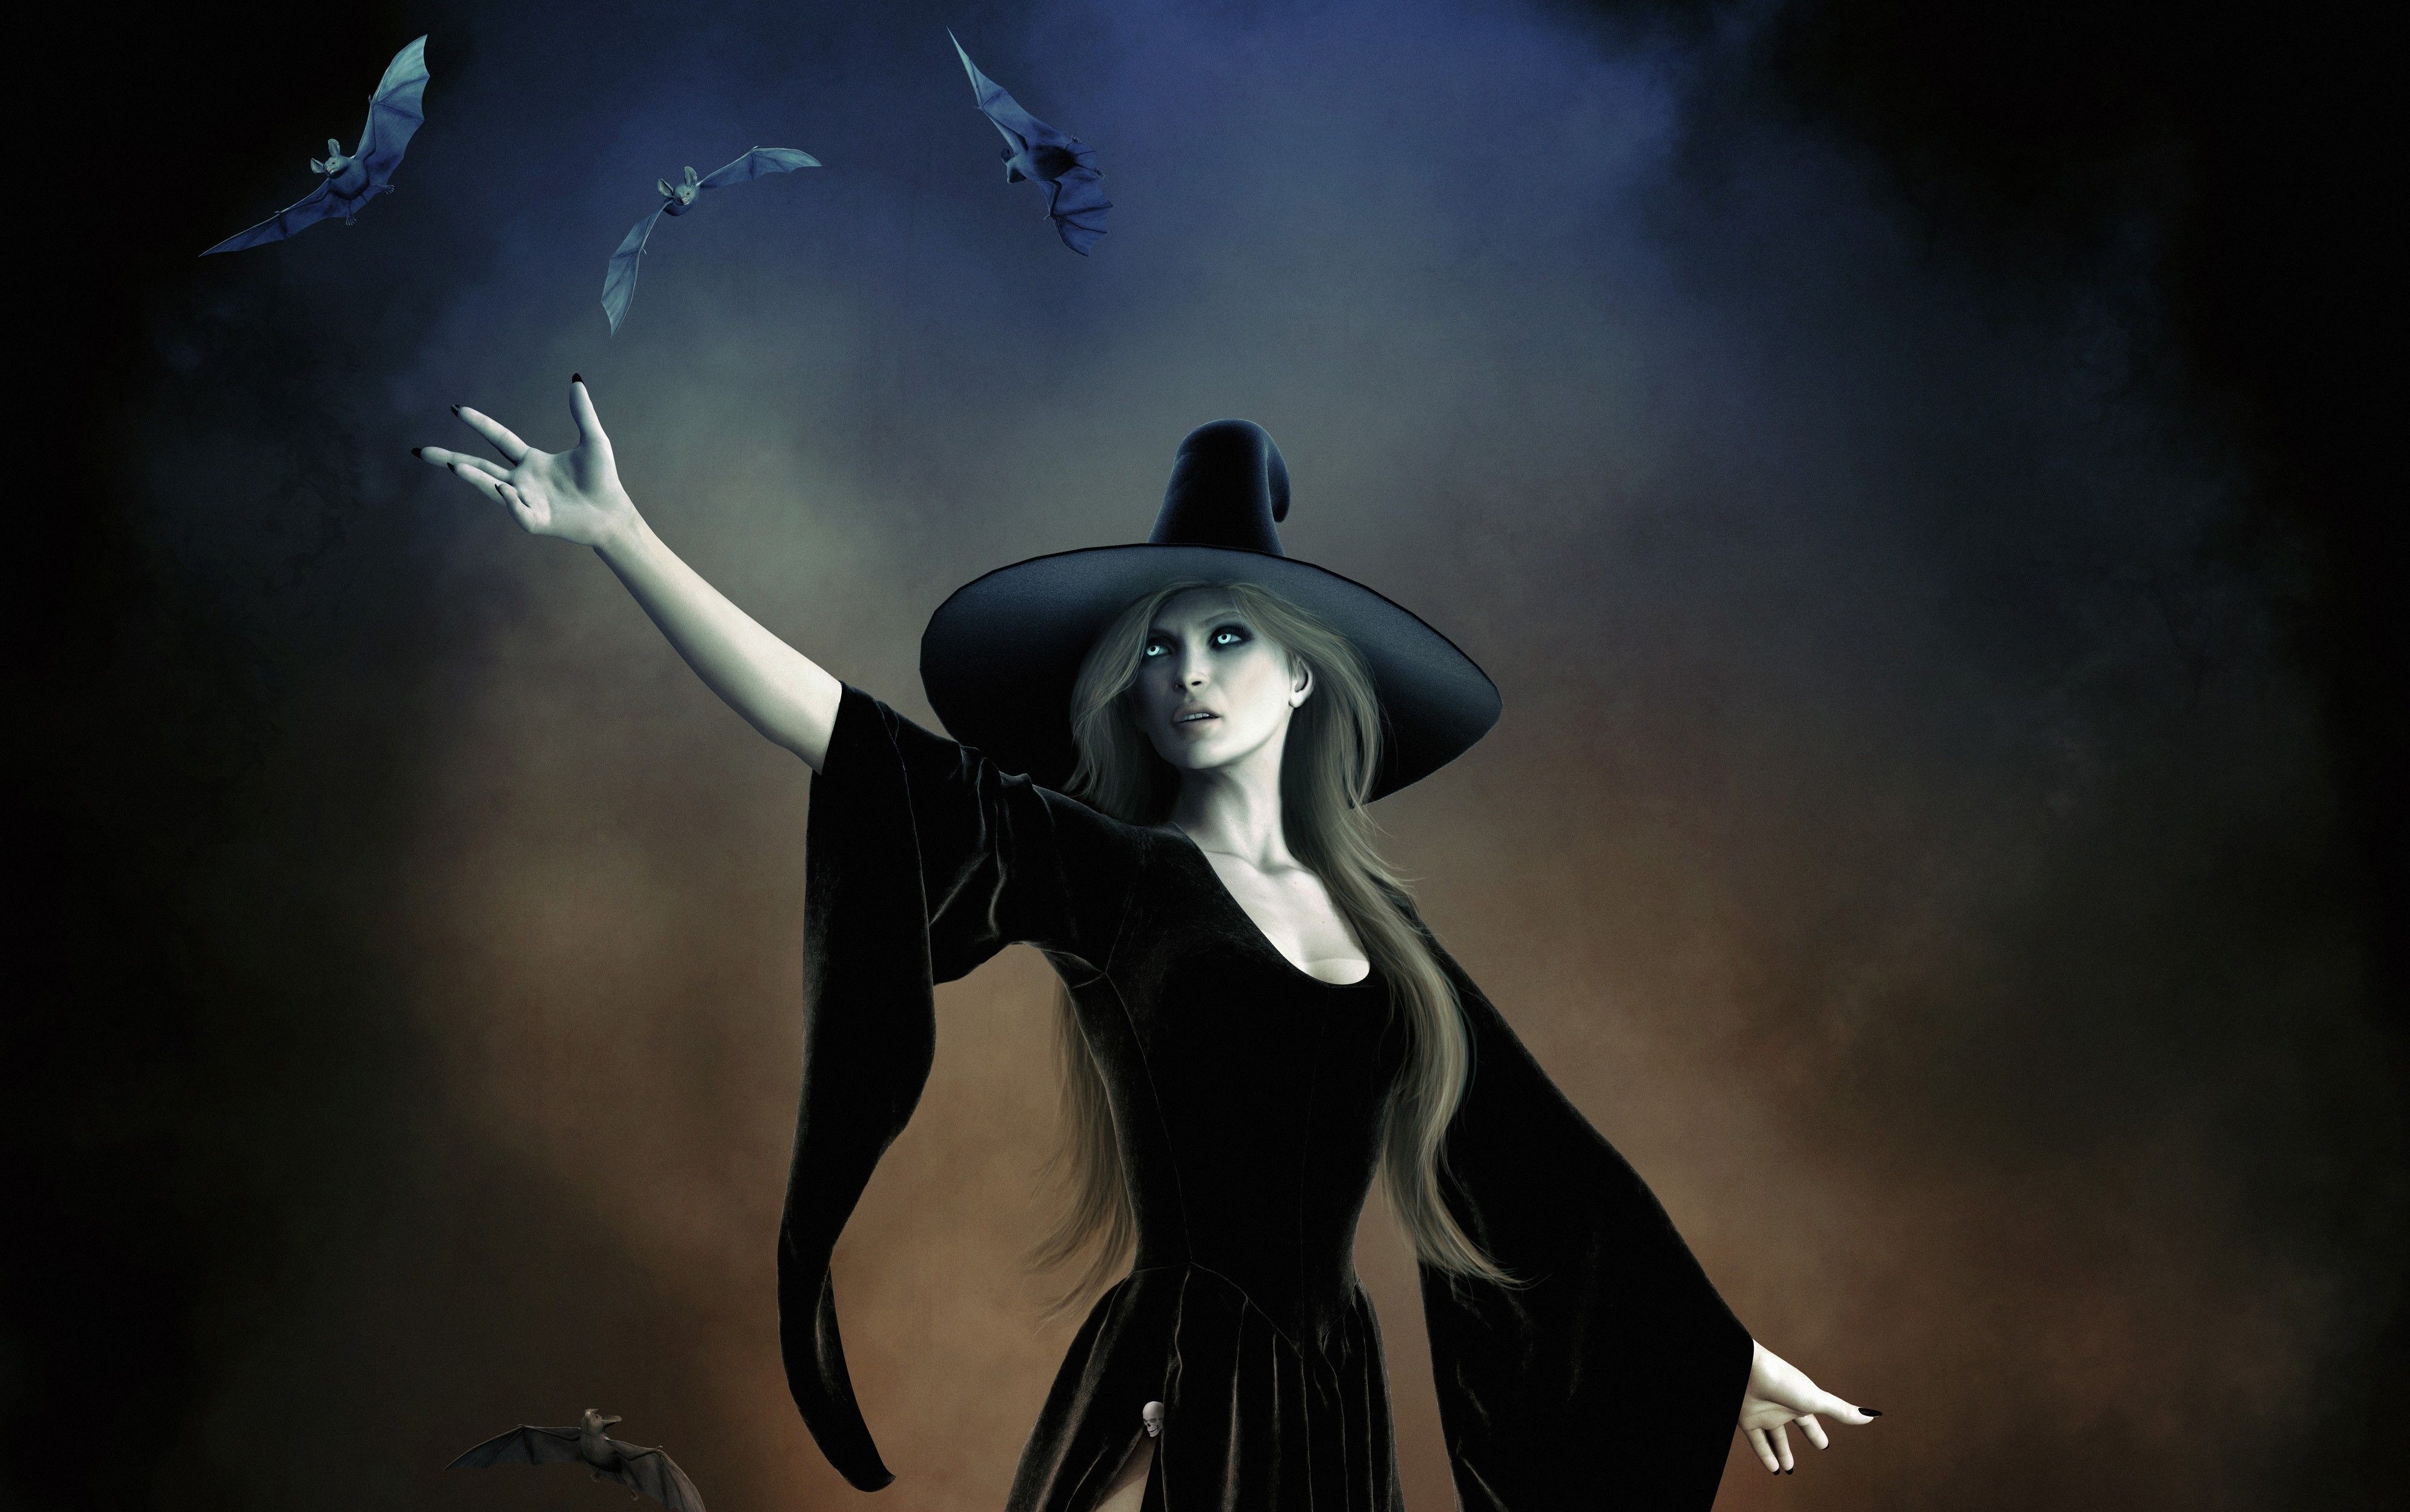 Fondos de pantalla de brujas goticas - FondosMil